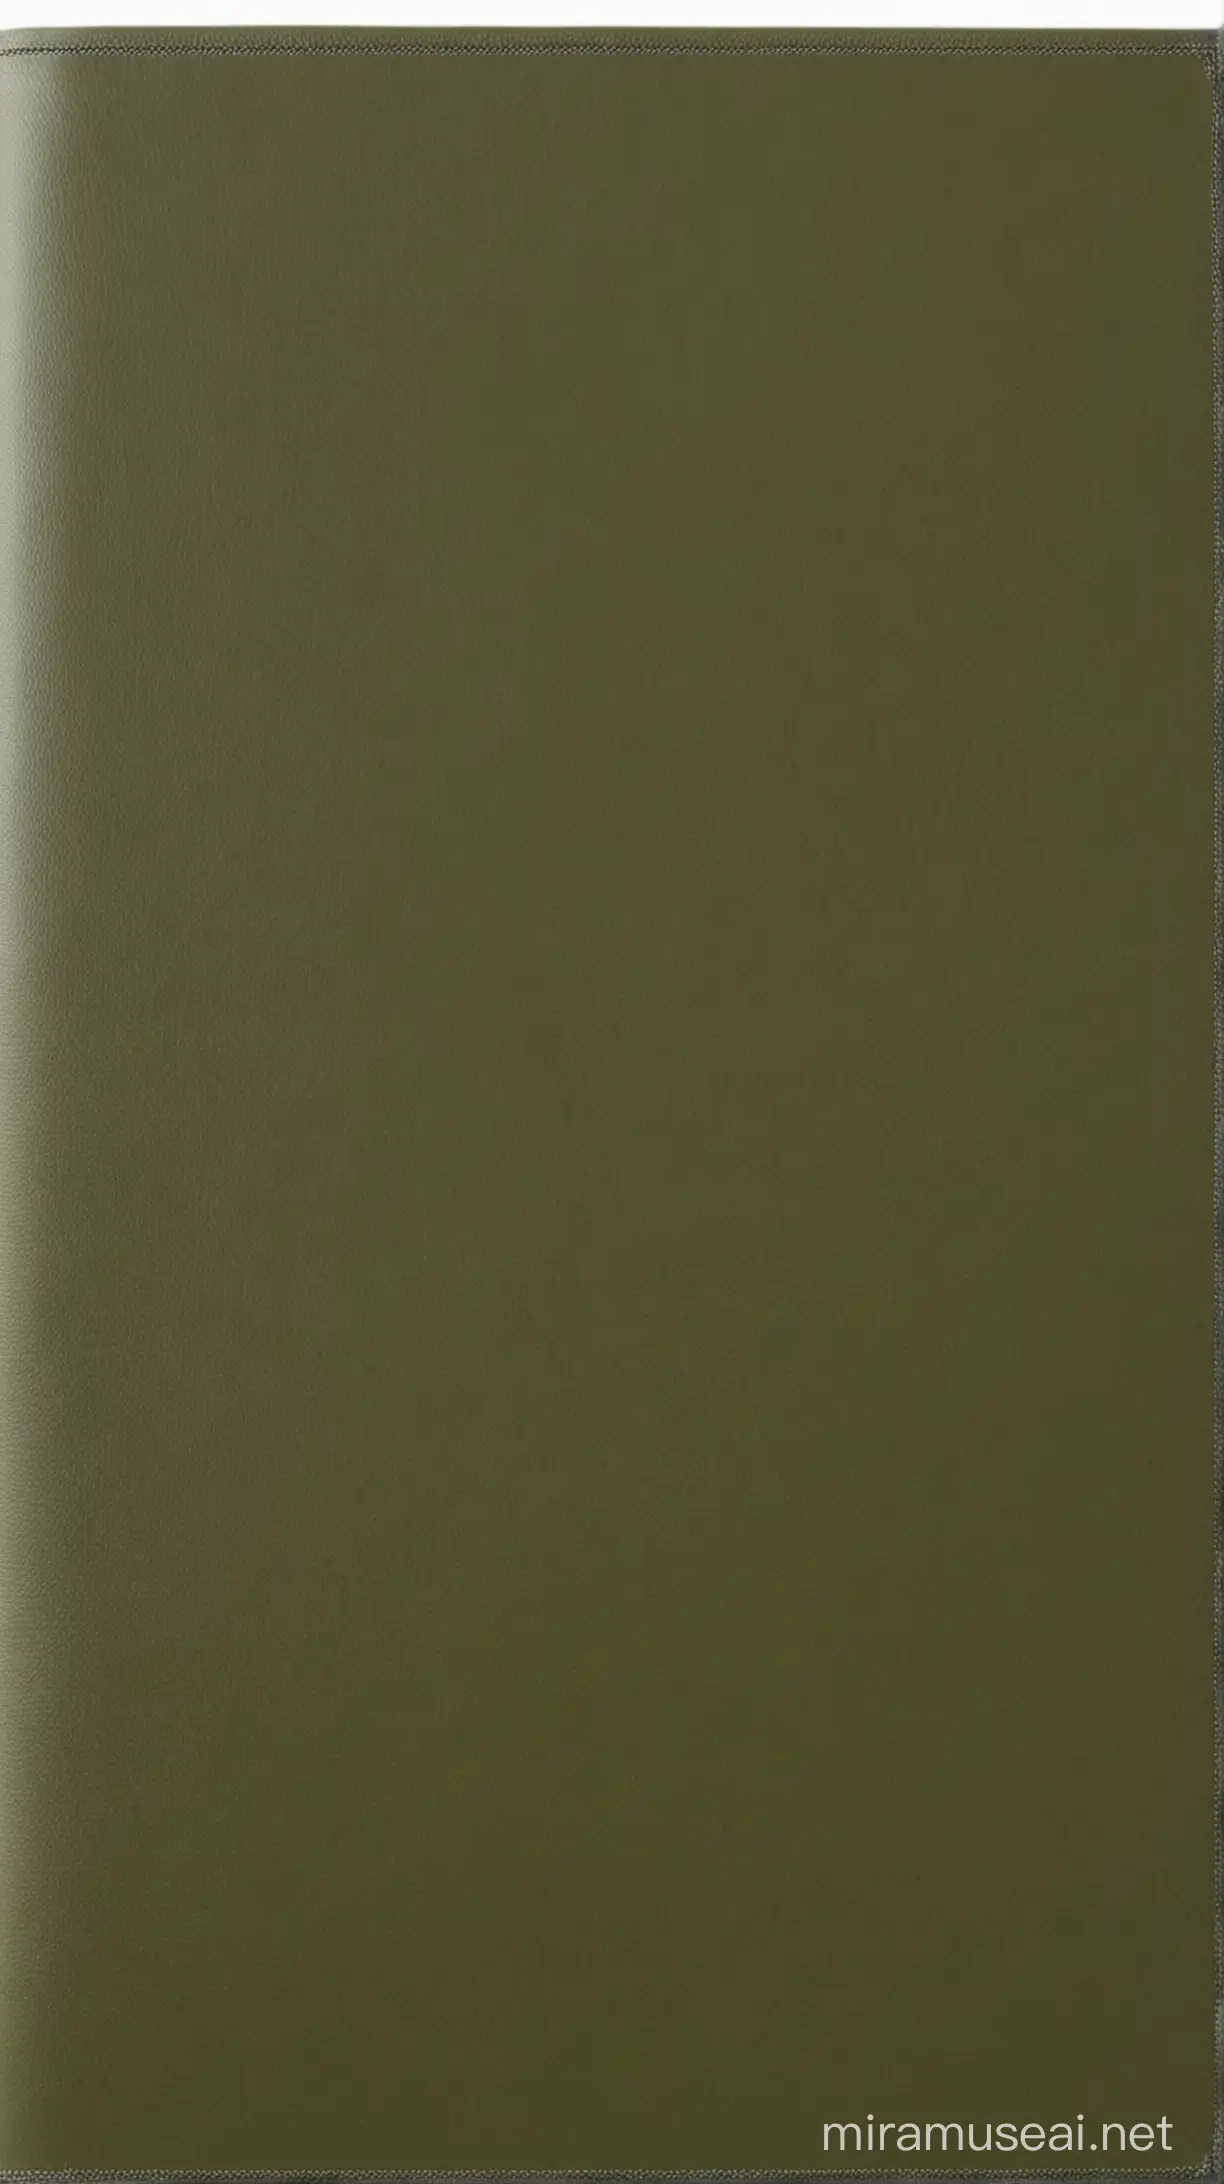 Burgues bookcover, Olive green